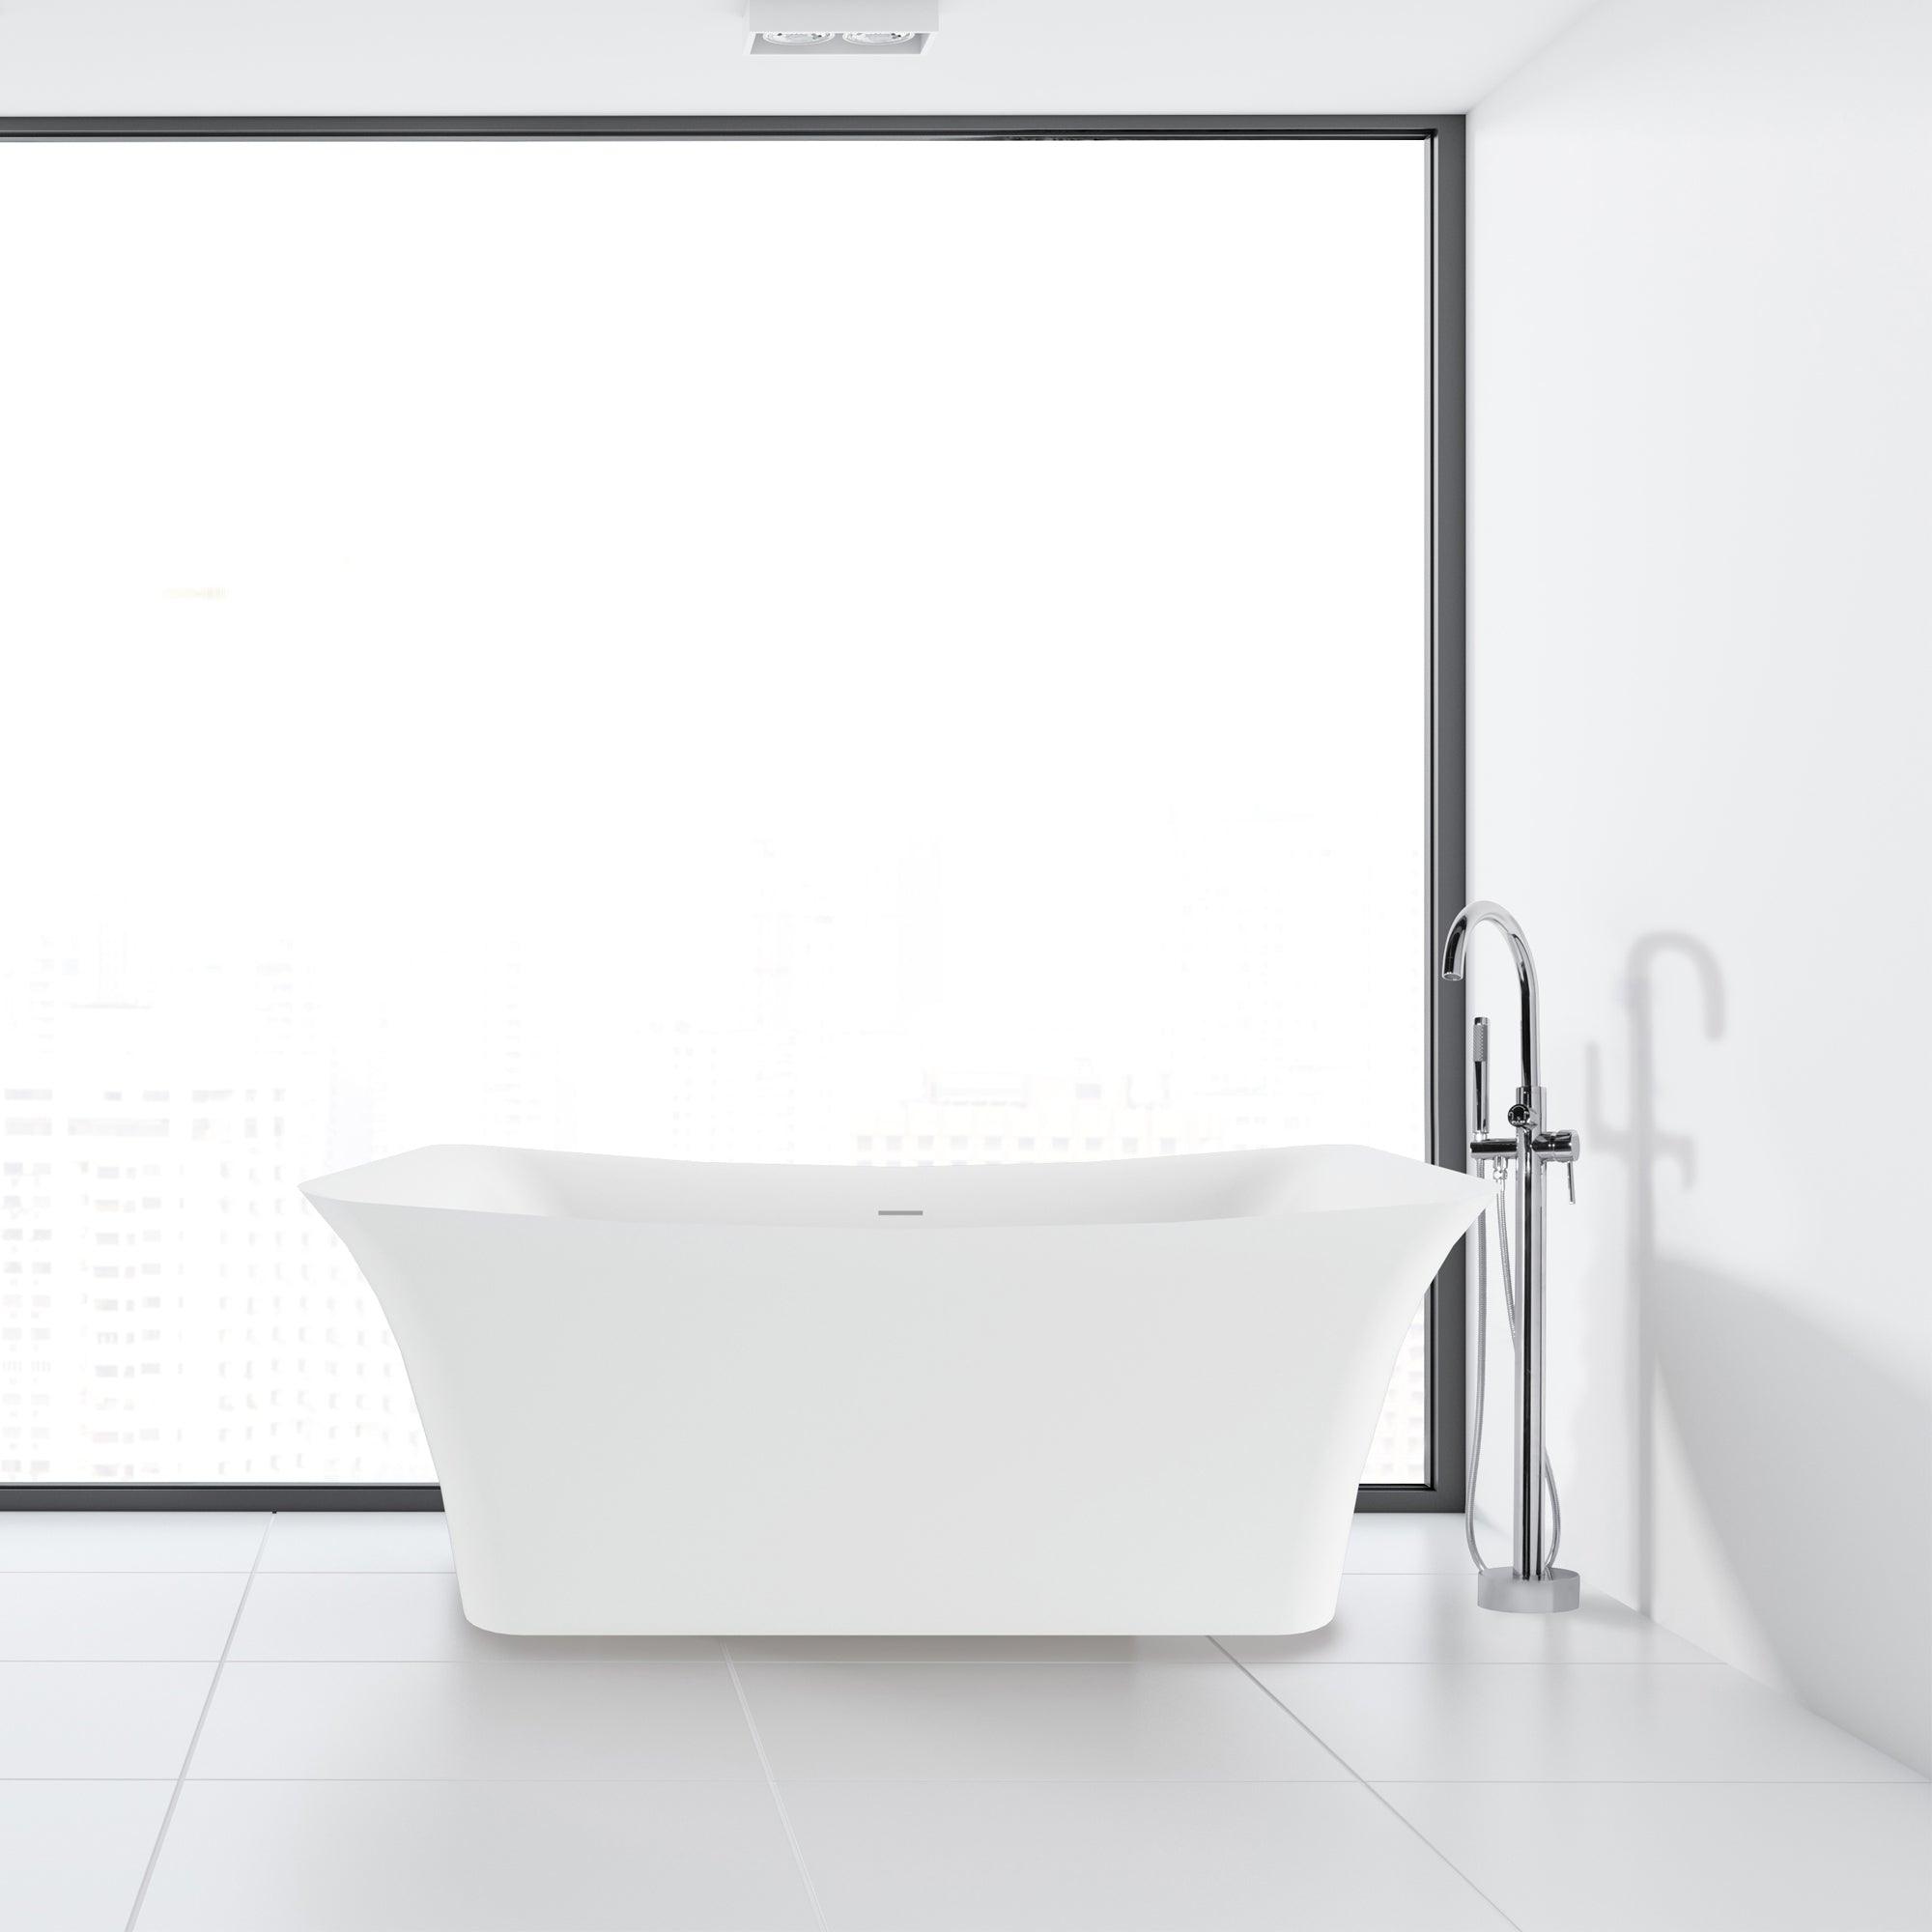 PULSE Tubs White 100% Acrylic Freestanding Tub - Bathroom Design Center